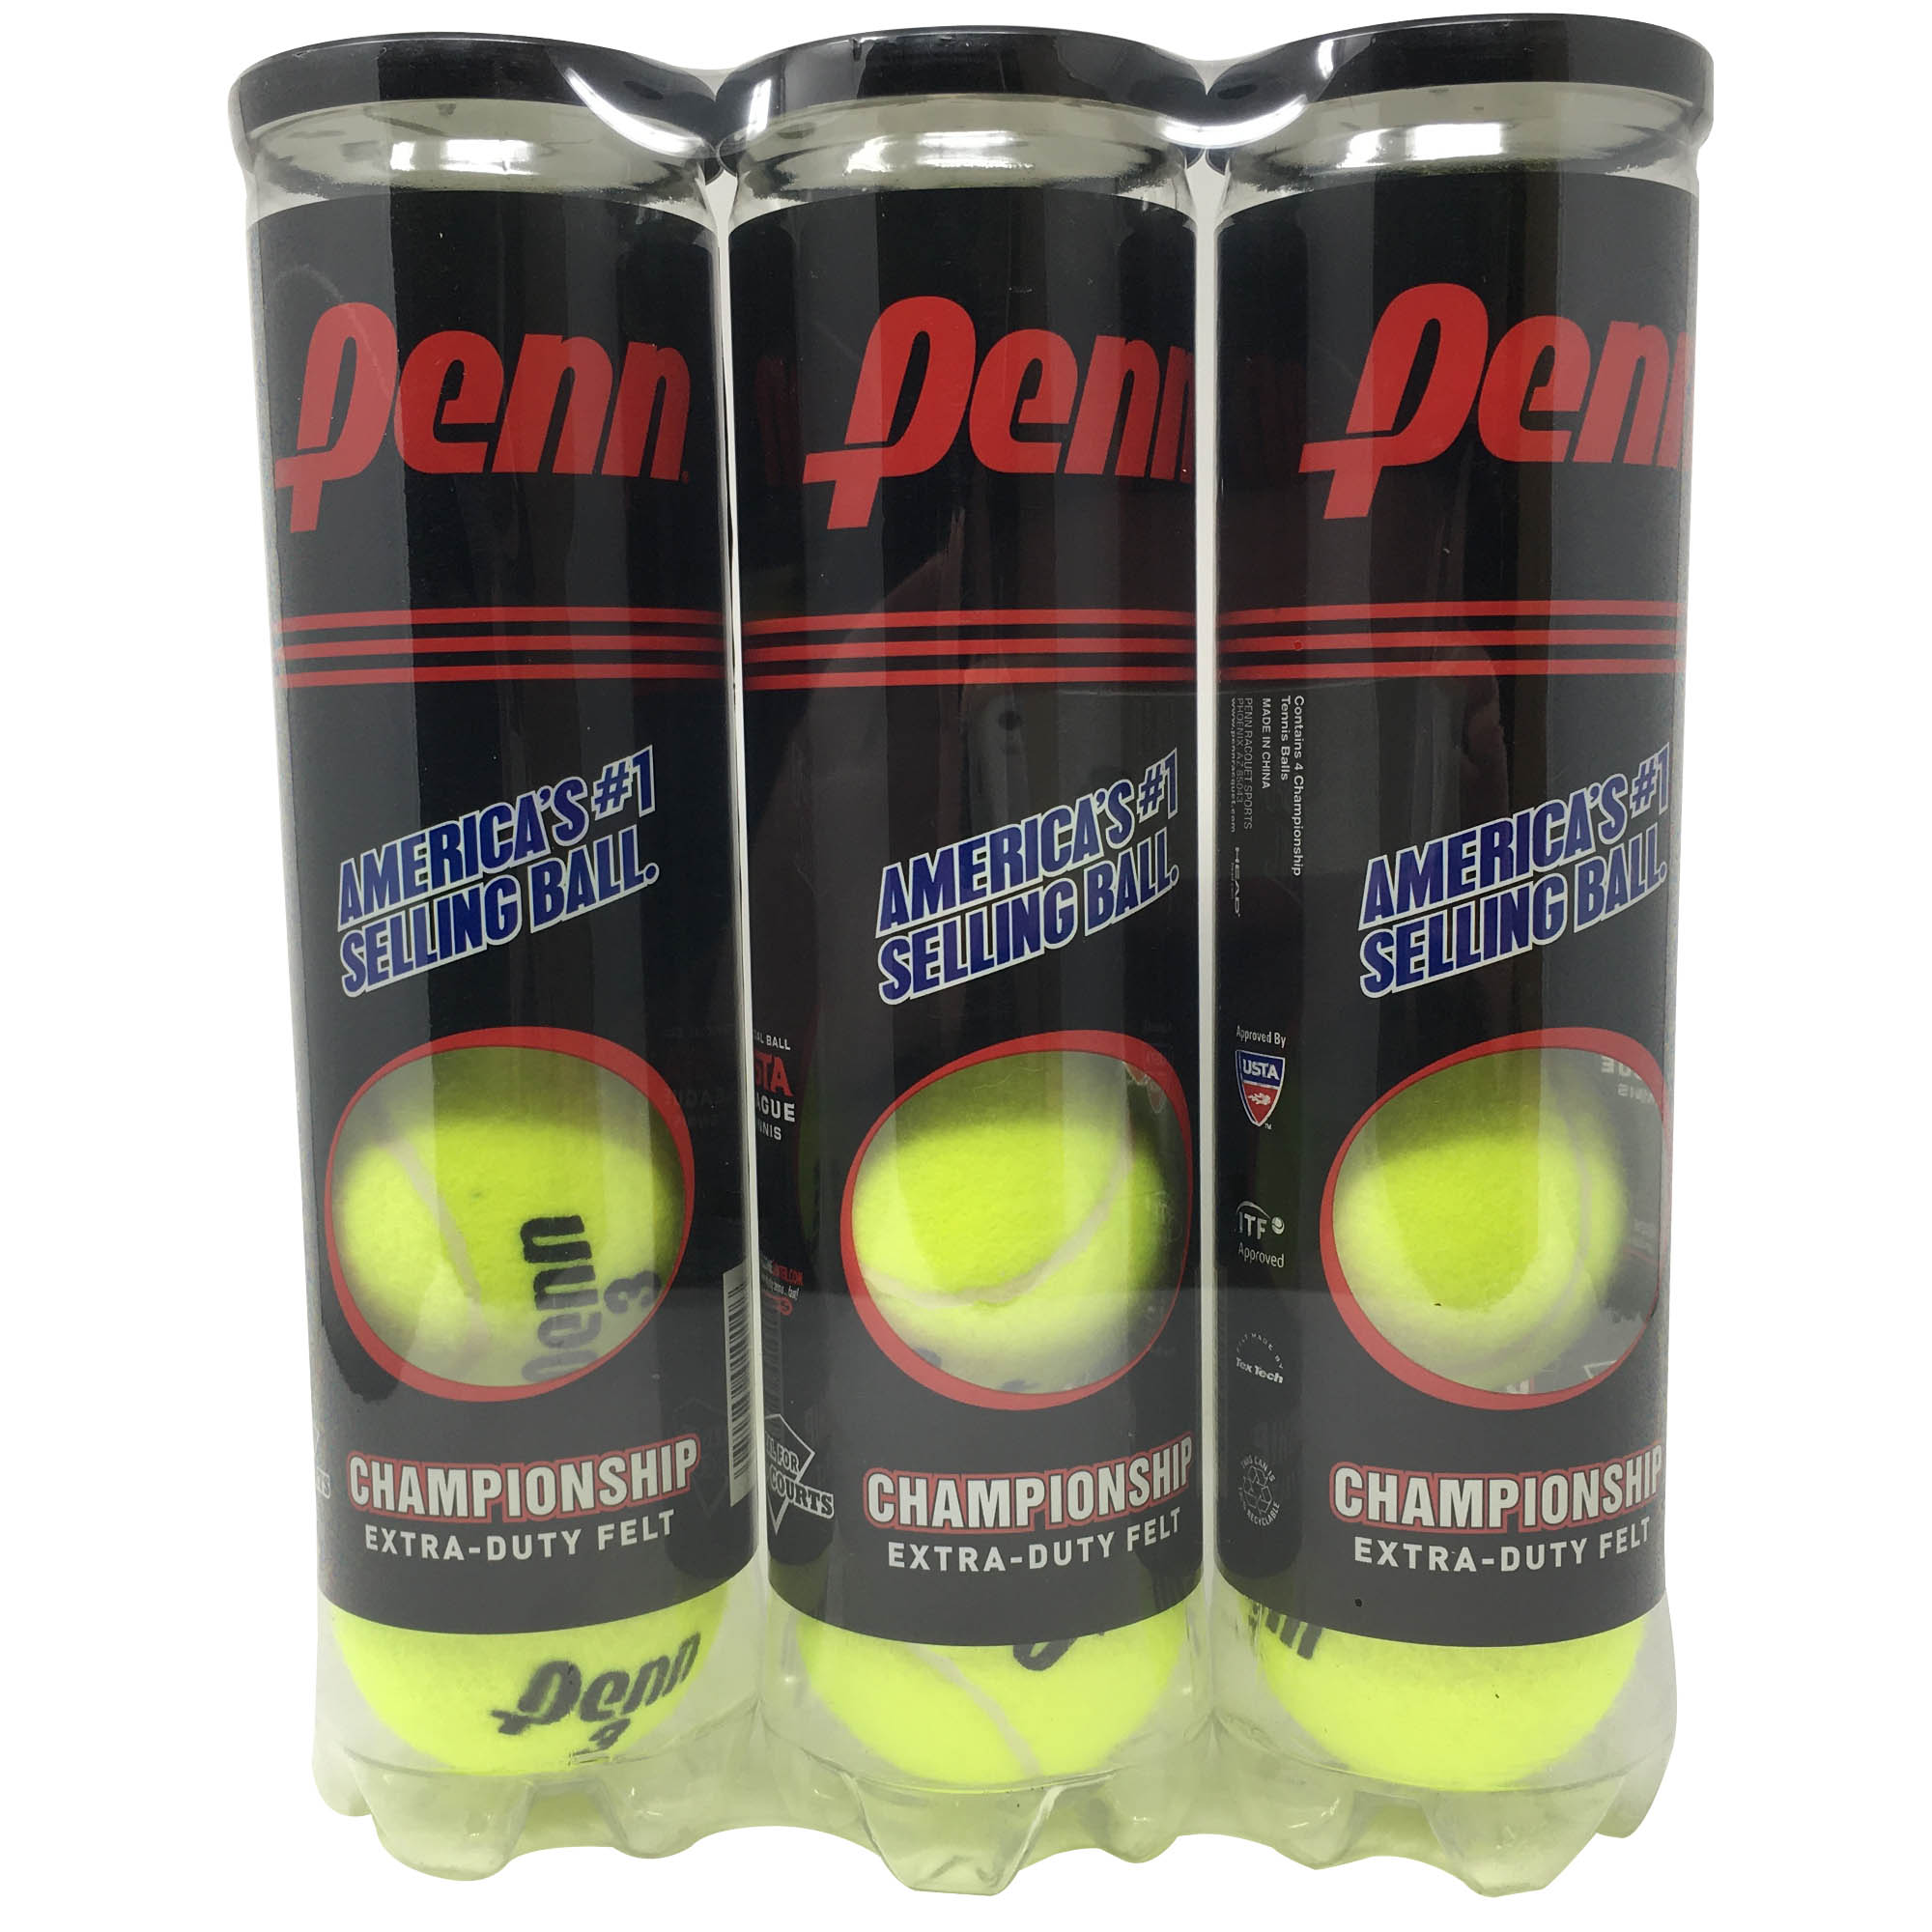 Penn Championship Tennis Balls - 1 Dozen